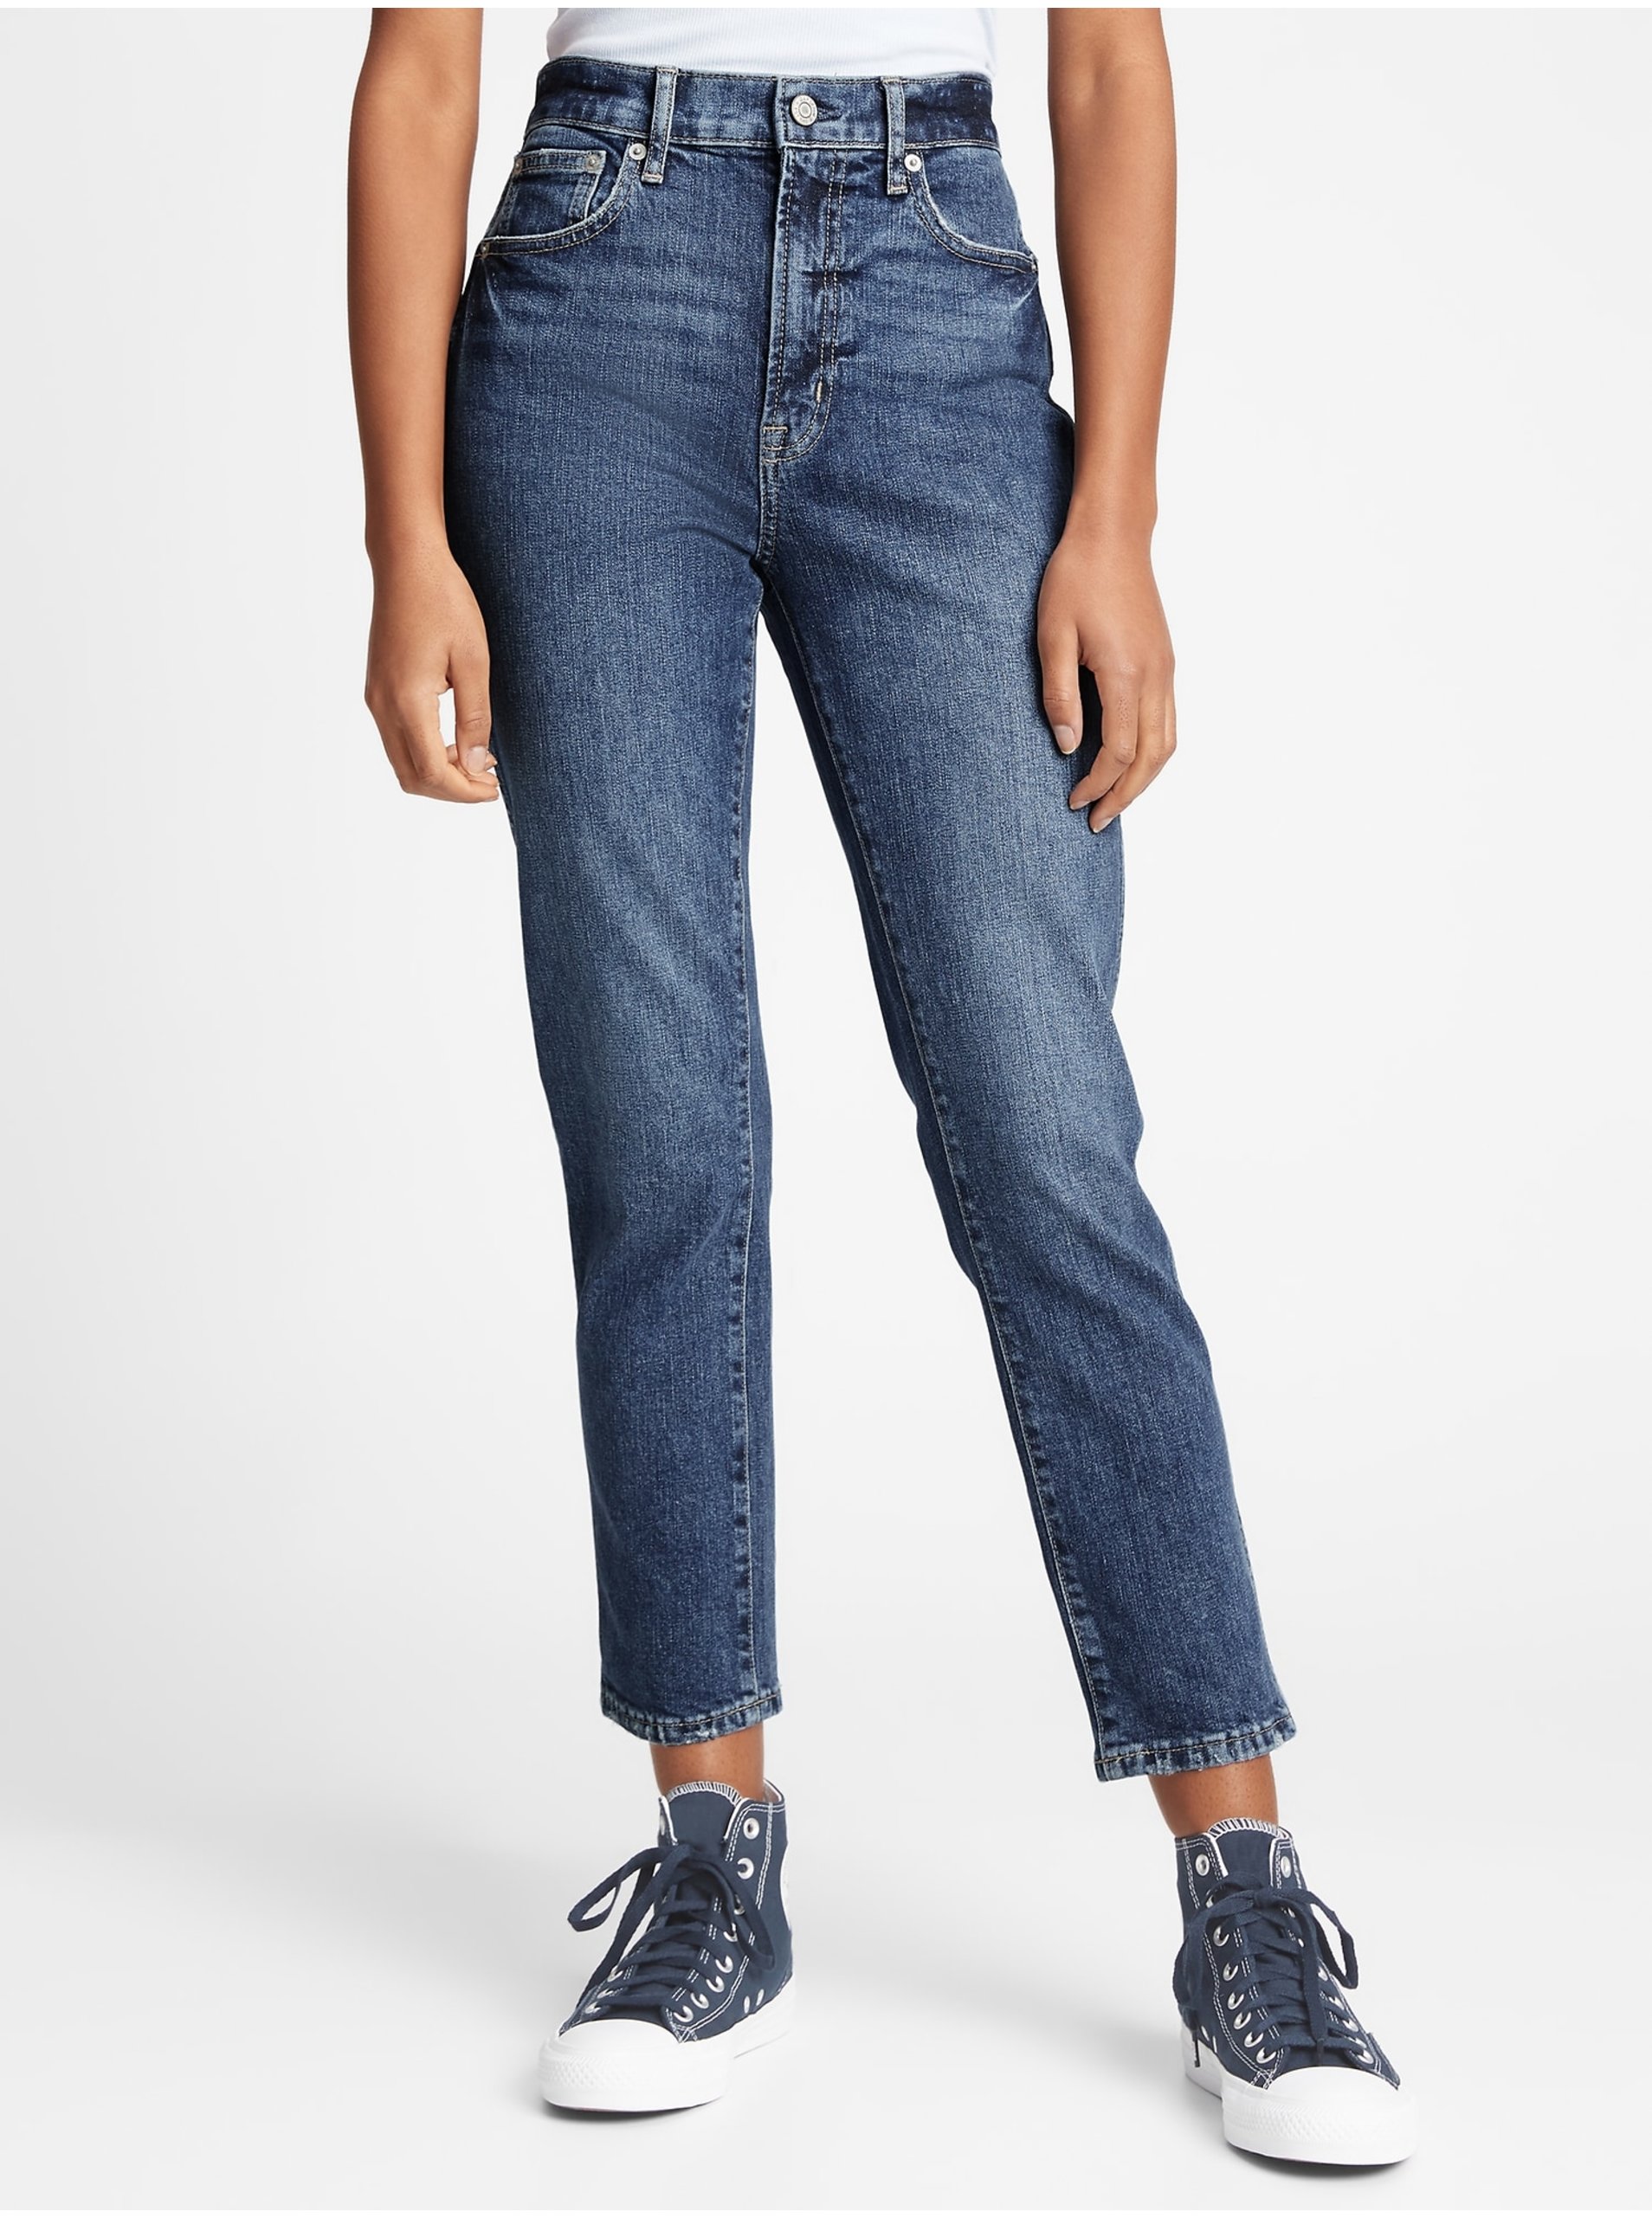 Lacno Modré dámské džíny high rise cigarette jeans GAP